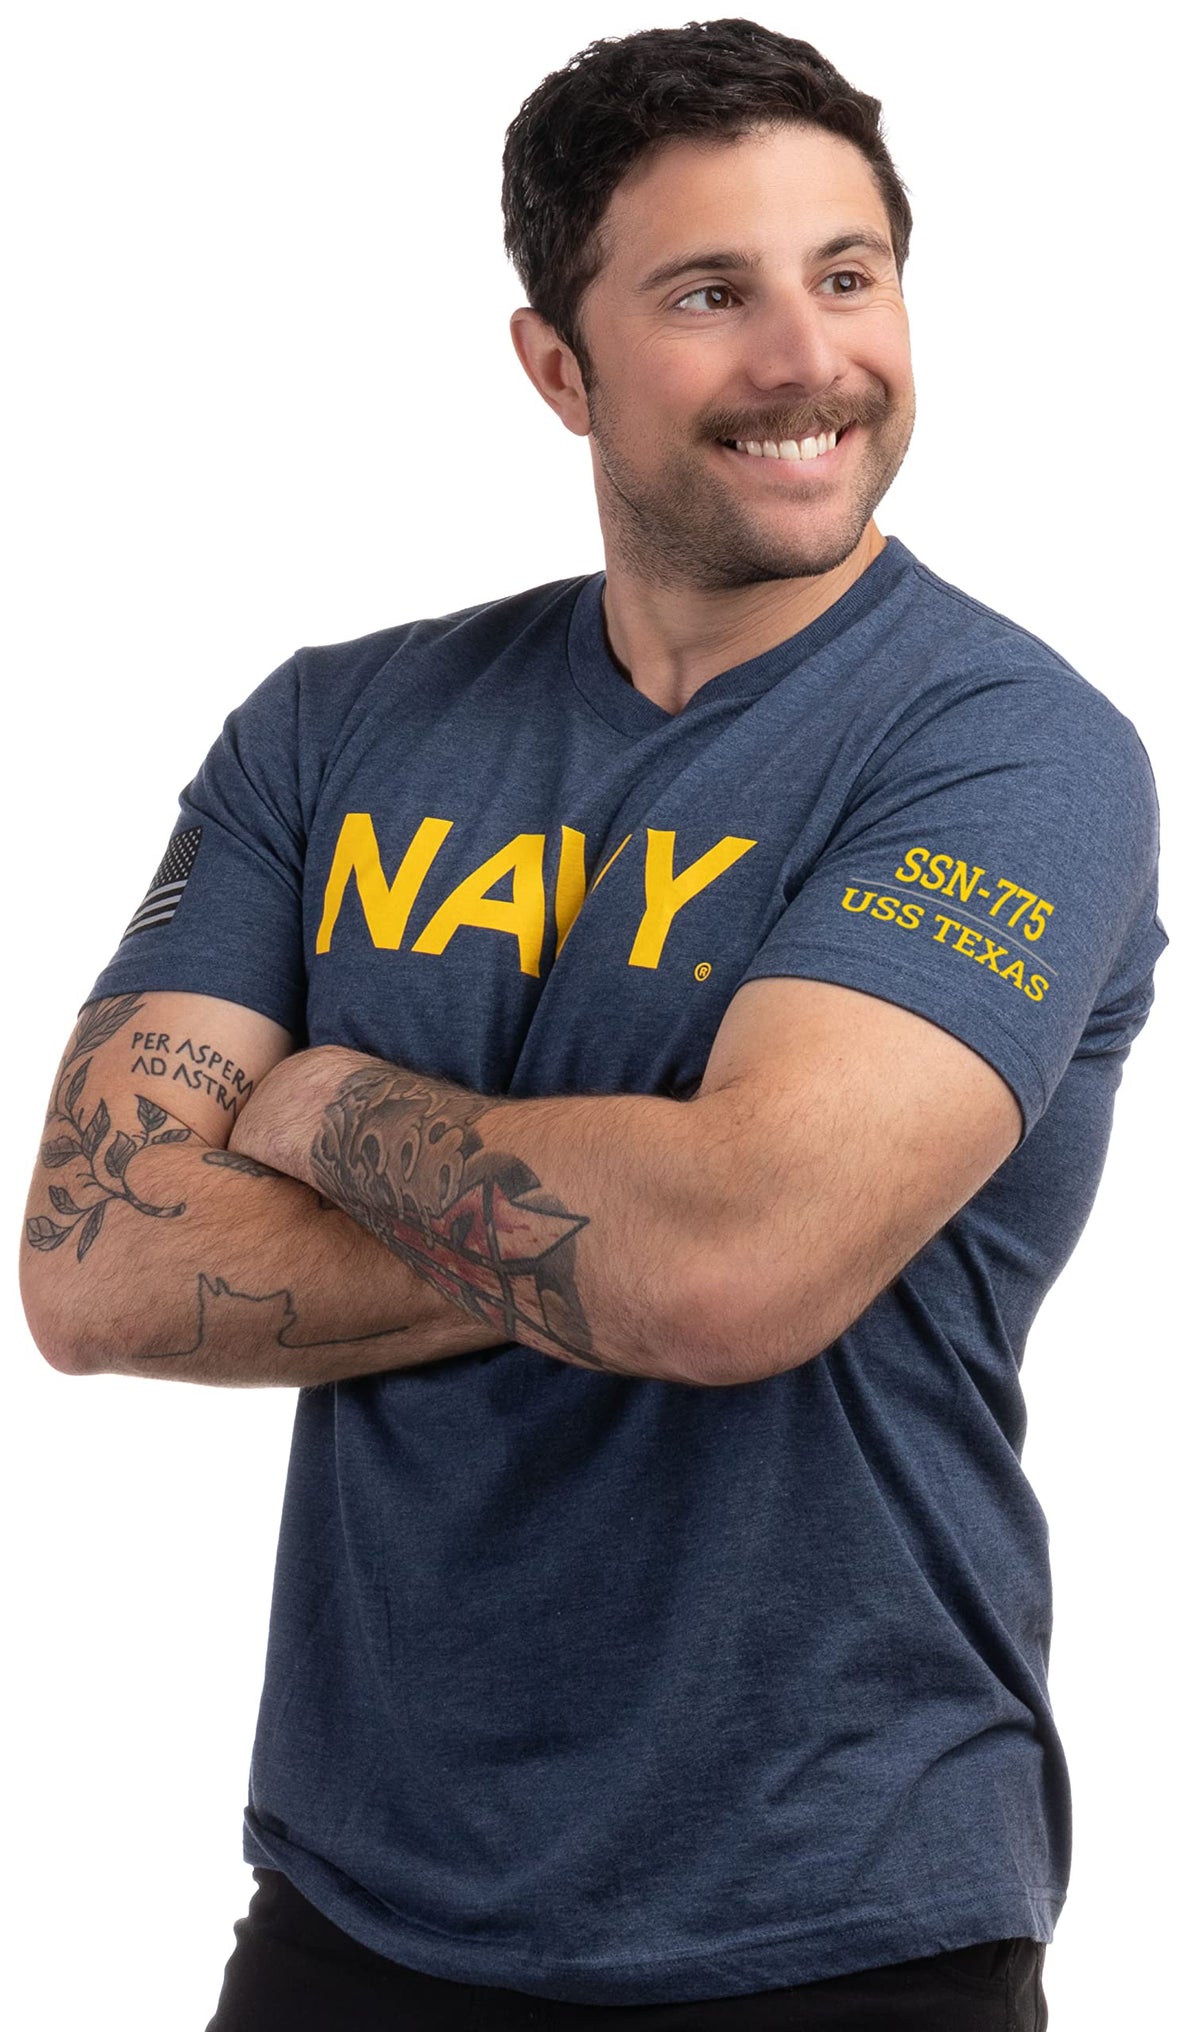 USS Texas, SSN-775 | U.S. Navy Sailor Veteran USN United States Naval T-shirt for Men Women